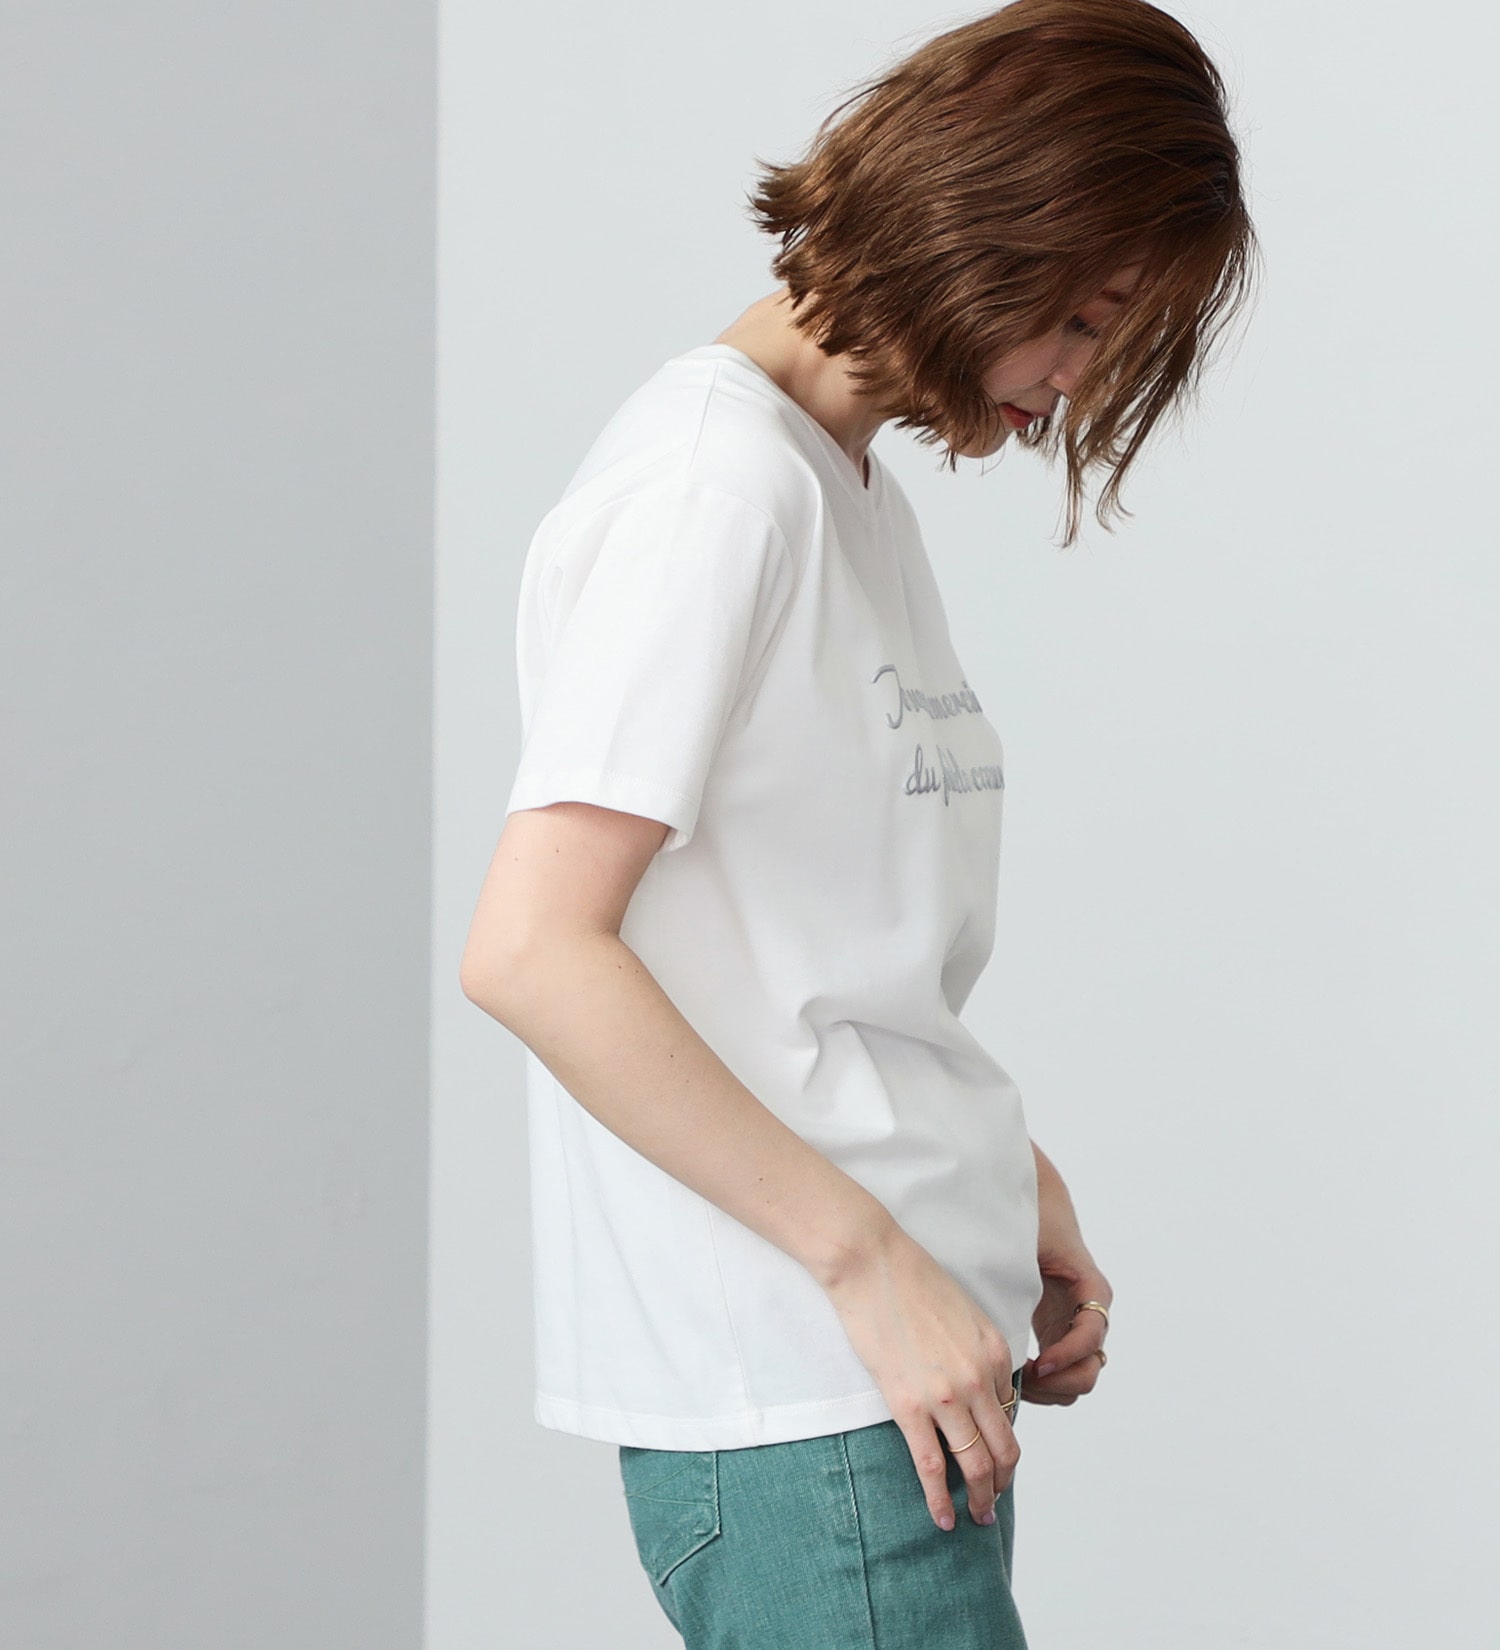 SOMETHING(サムシング)のSOMETHING シャイニープリントTシャツ【半袖】|トップス/Tシャツ/カットソー/レディース|ホワイト